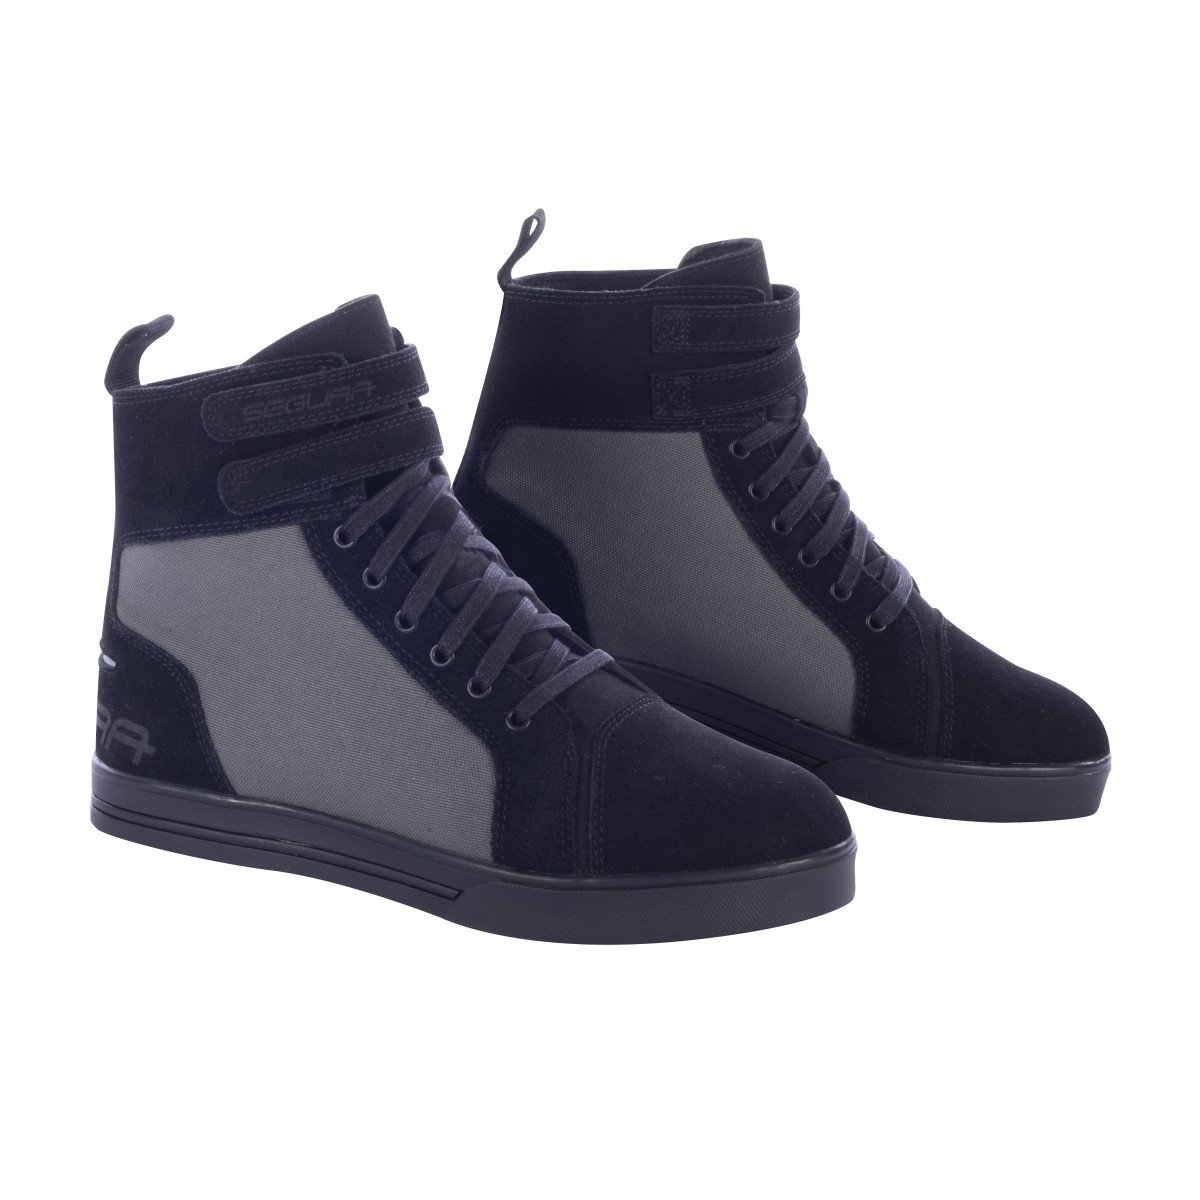 Image of Segura Sneakers Contact Black Grey Size 44 ID 3660815171578